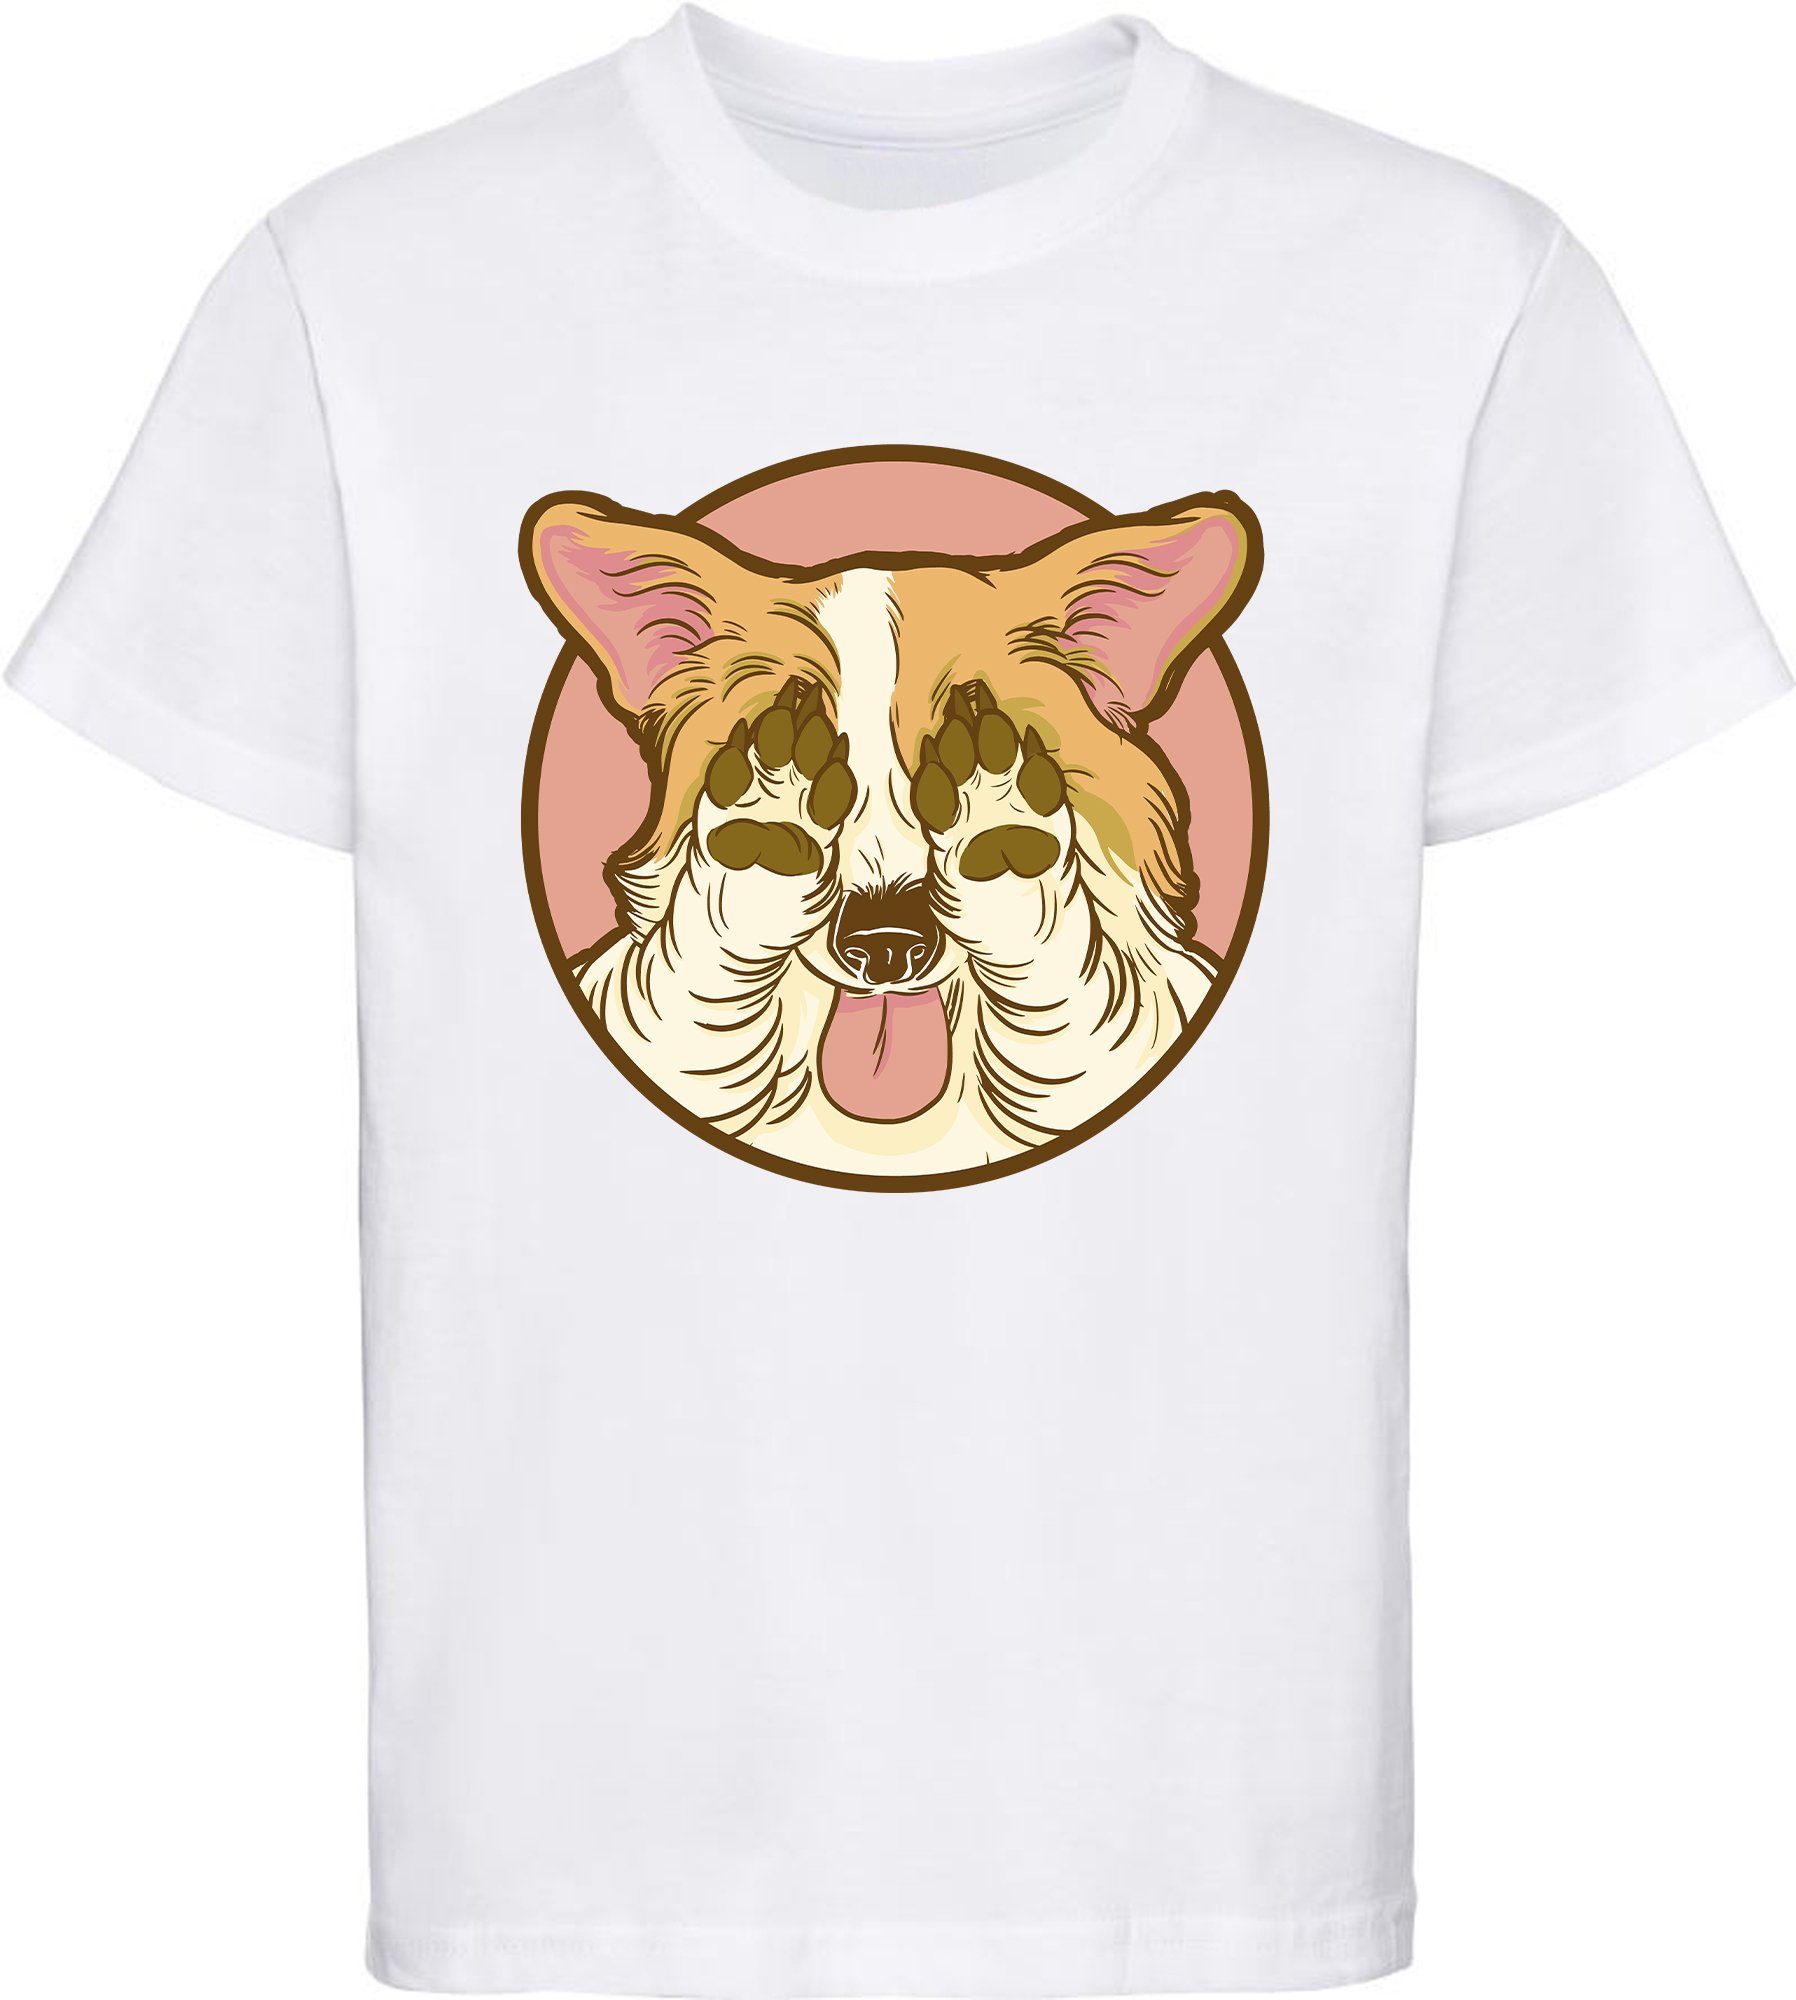 MyDesign24 Print-Shirt bedrucktes Kinder Hunde T-Shirt - Corgi der seine Augen zu hält Baumwollshirt mit Aufdruck, i226 weiss